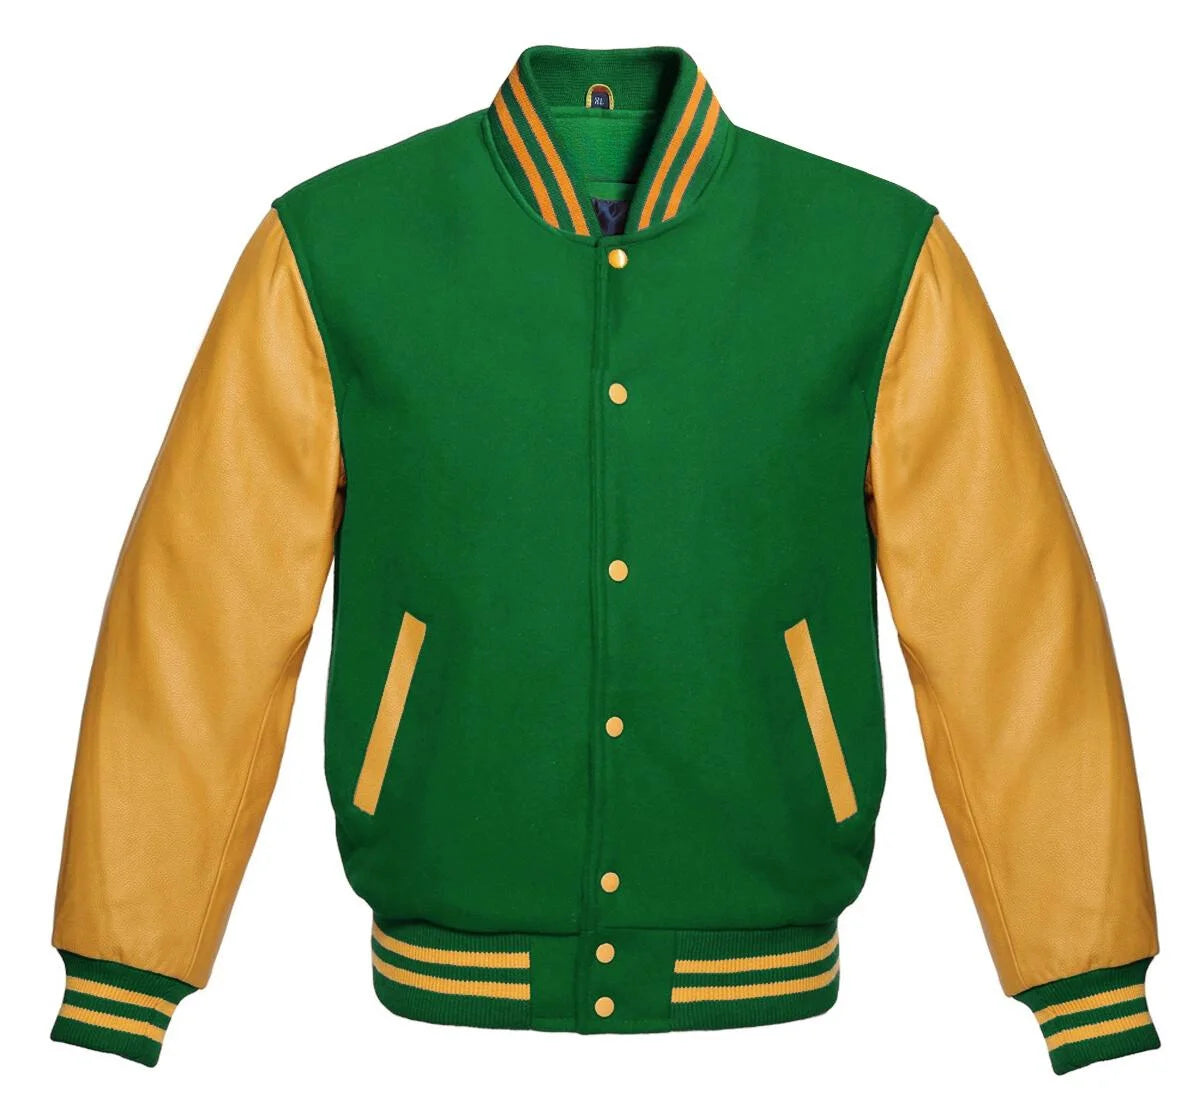 Grassy Green Letterman Jacket